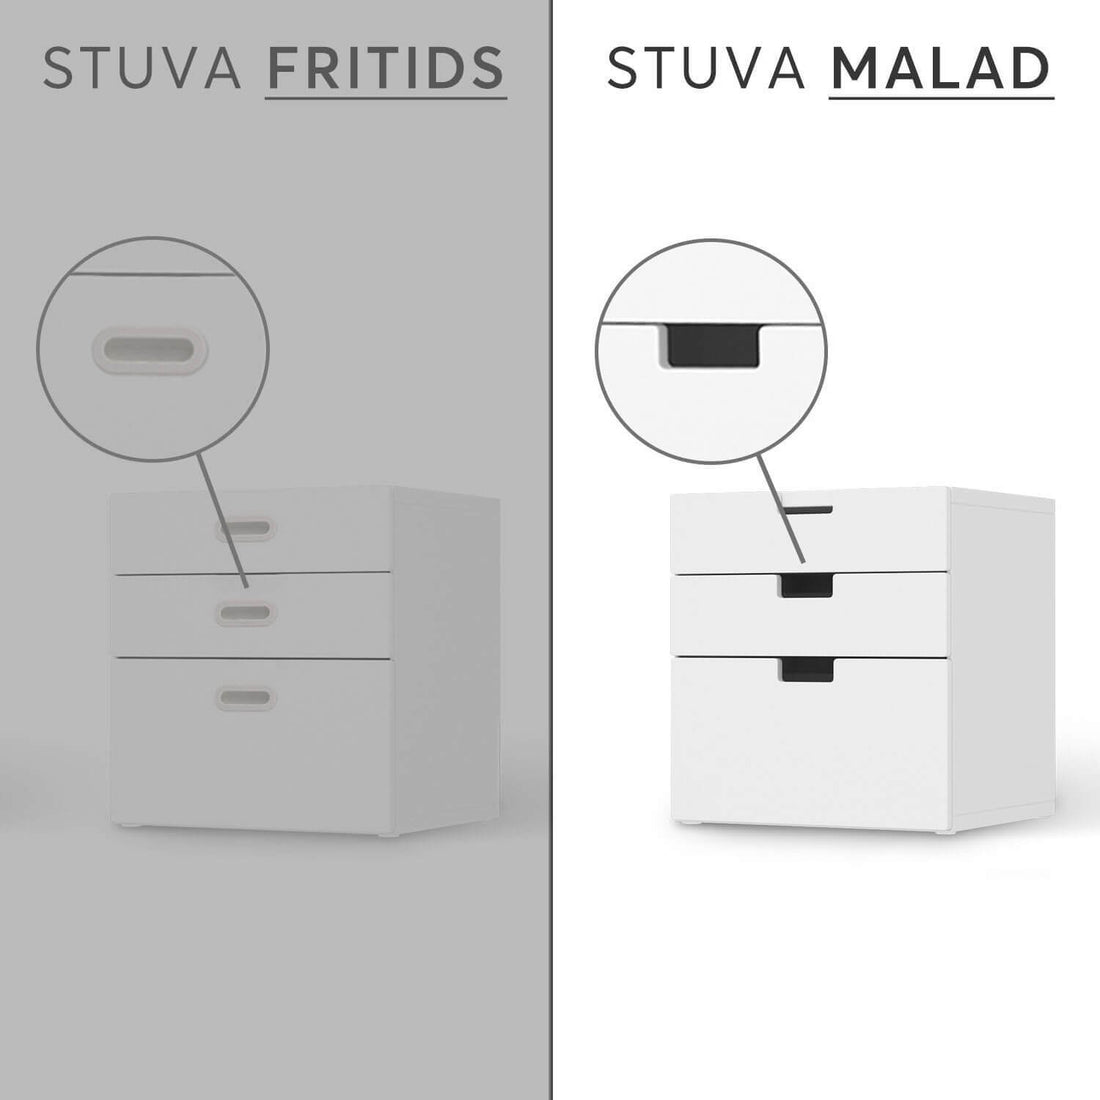 Folie für Möbel IKEA Stuva / Malad Kommode - 3 Schubladen - Design: Blue Mandala